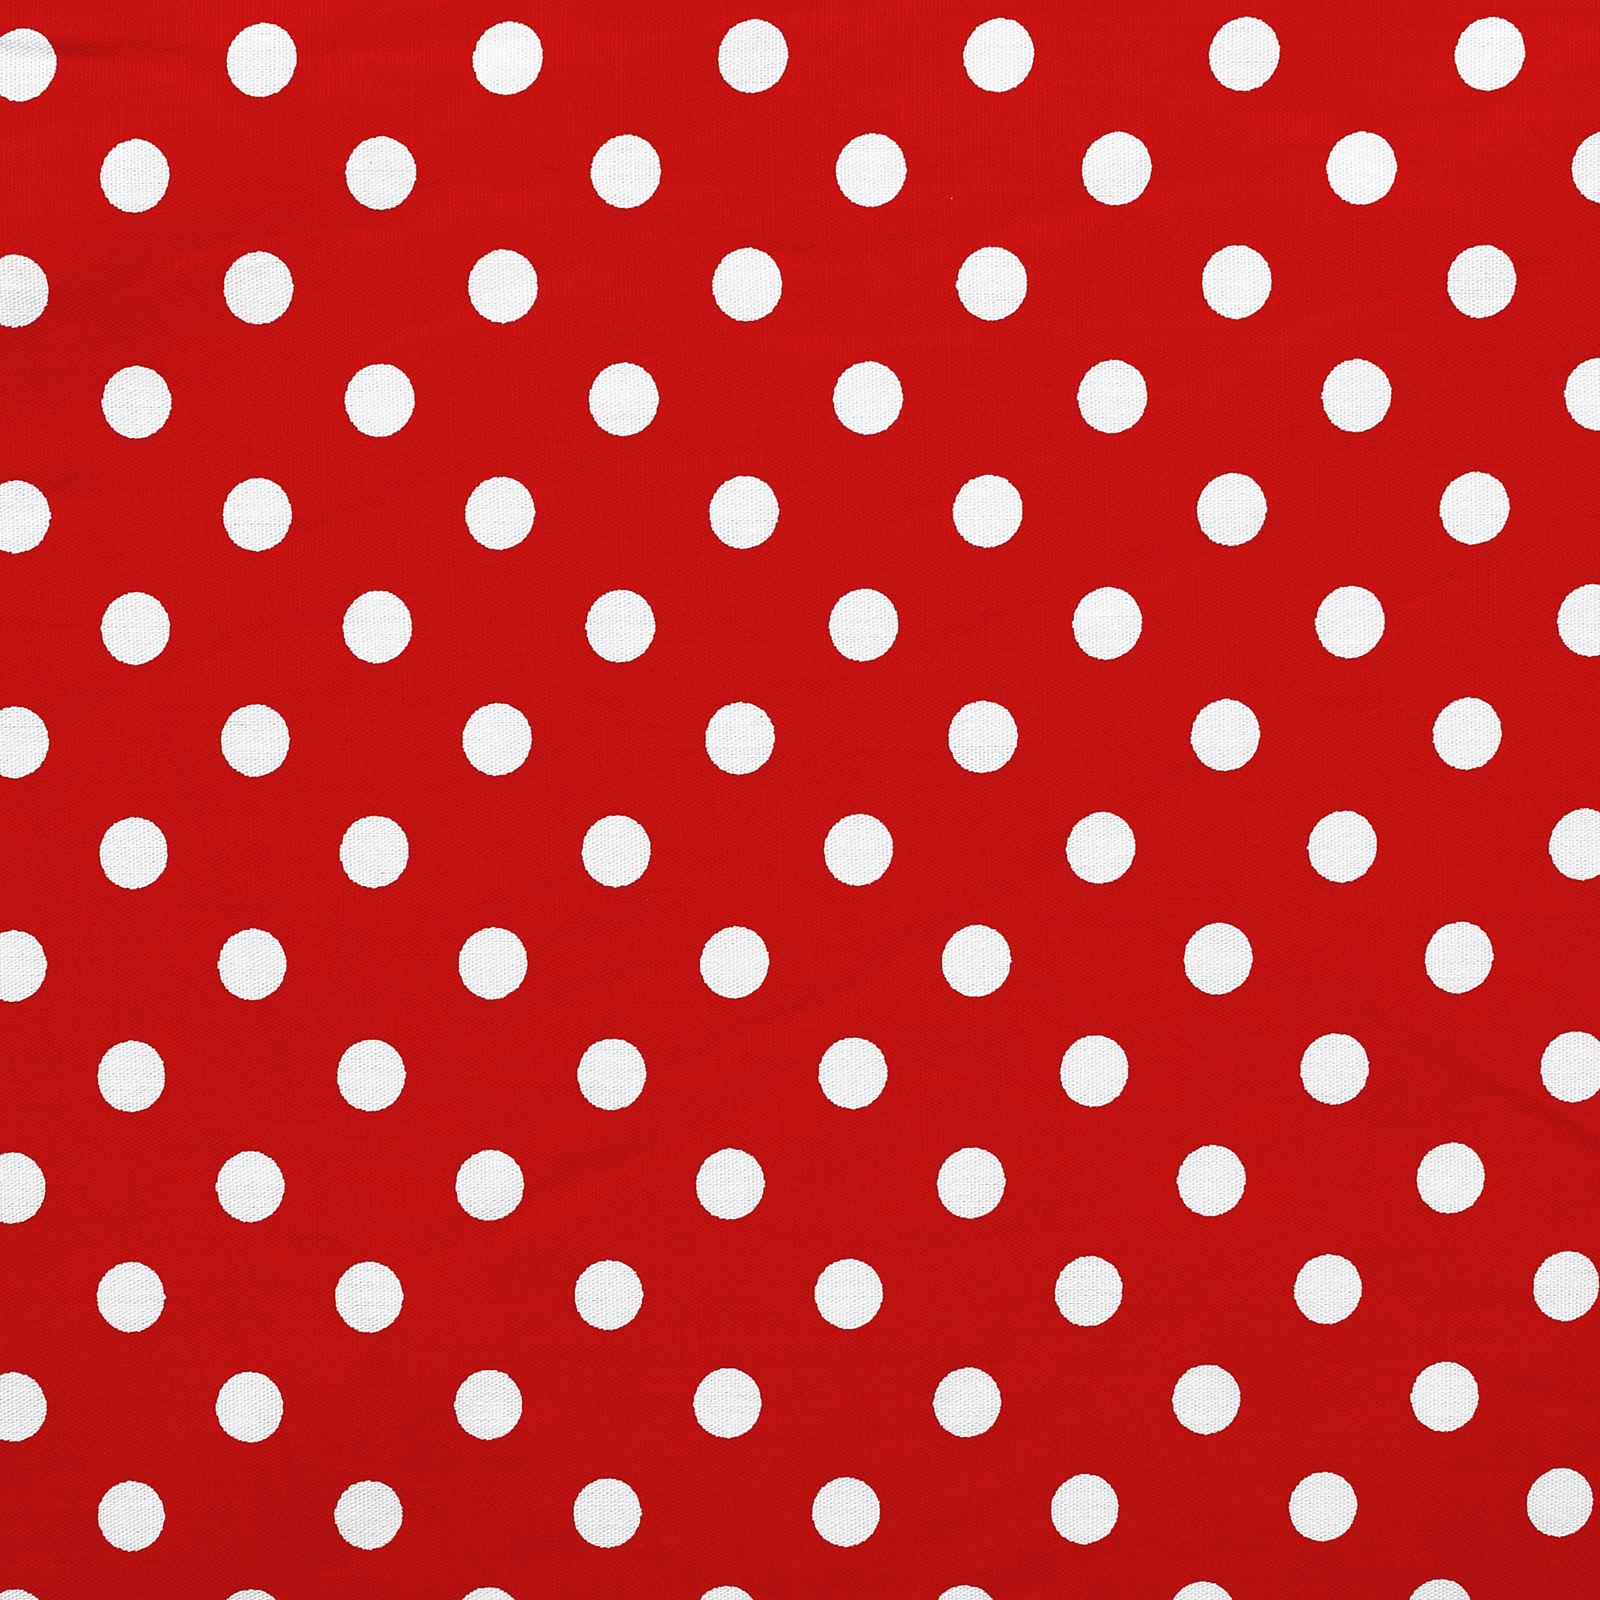 Big dots - red